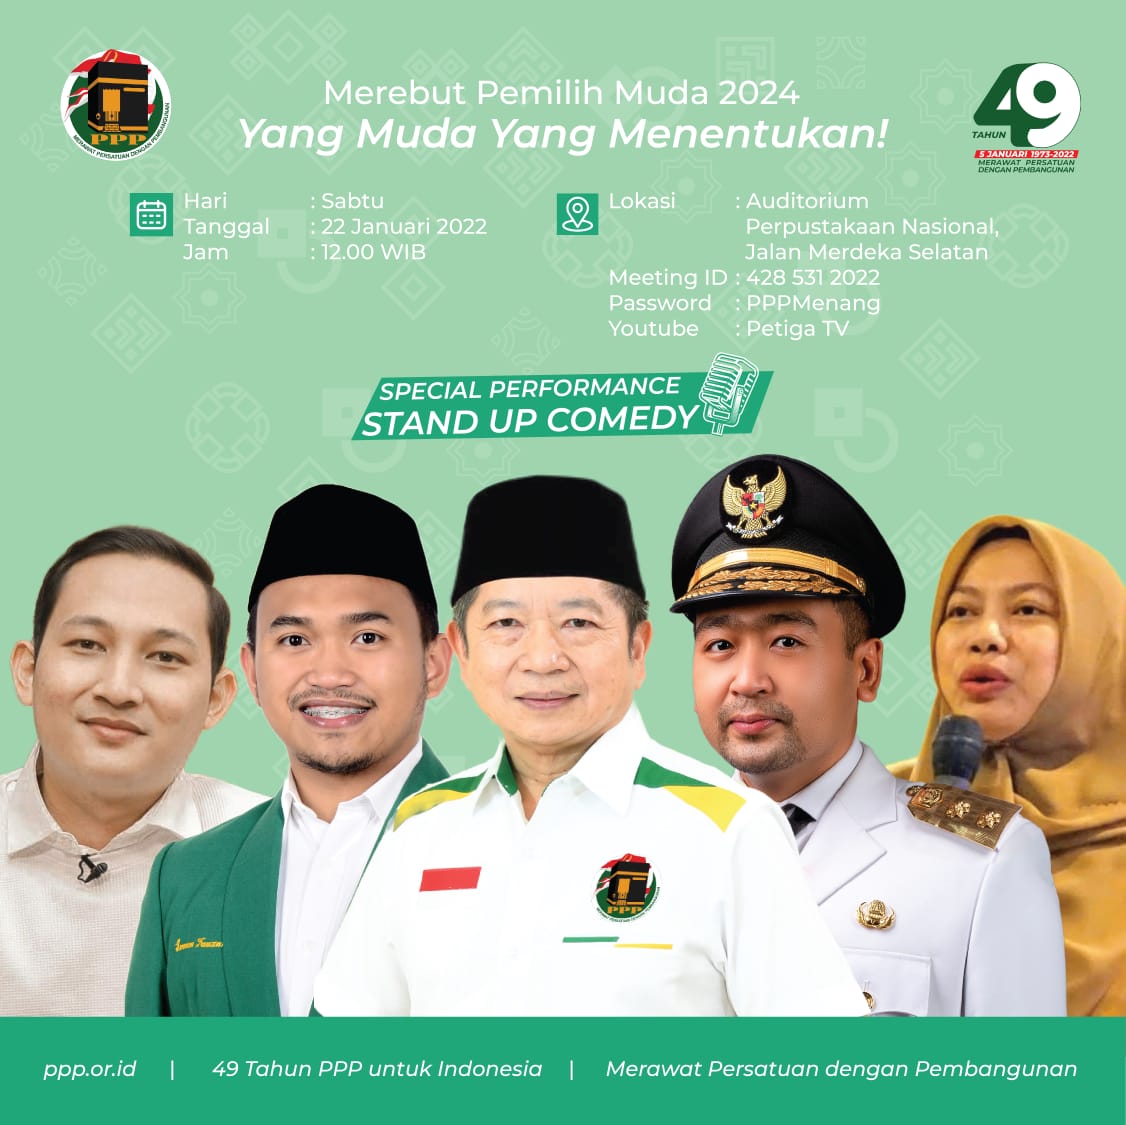 Talkshow Merebut Pemilih Muda 2024 Yang Muda yang Menentukan. dok pribadi?Muhammad Idris/Lingkar.co